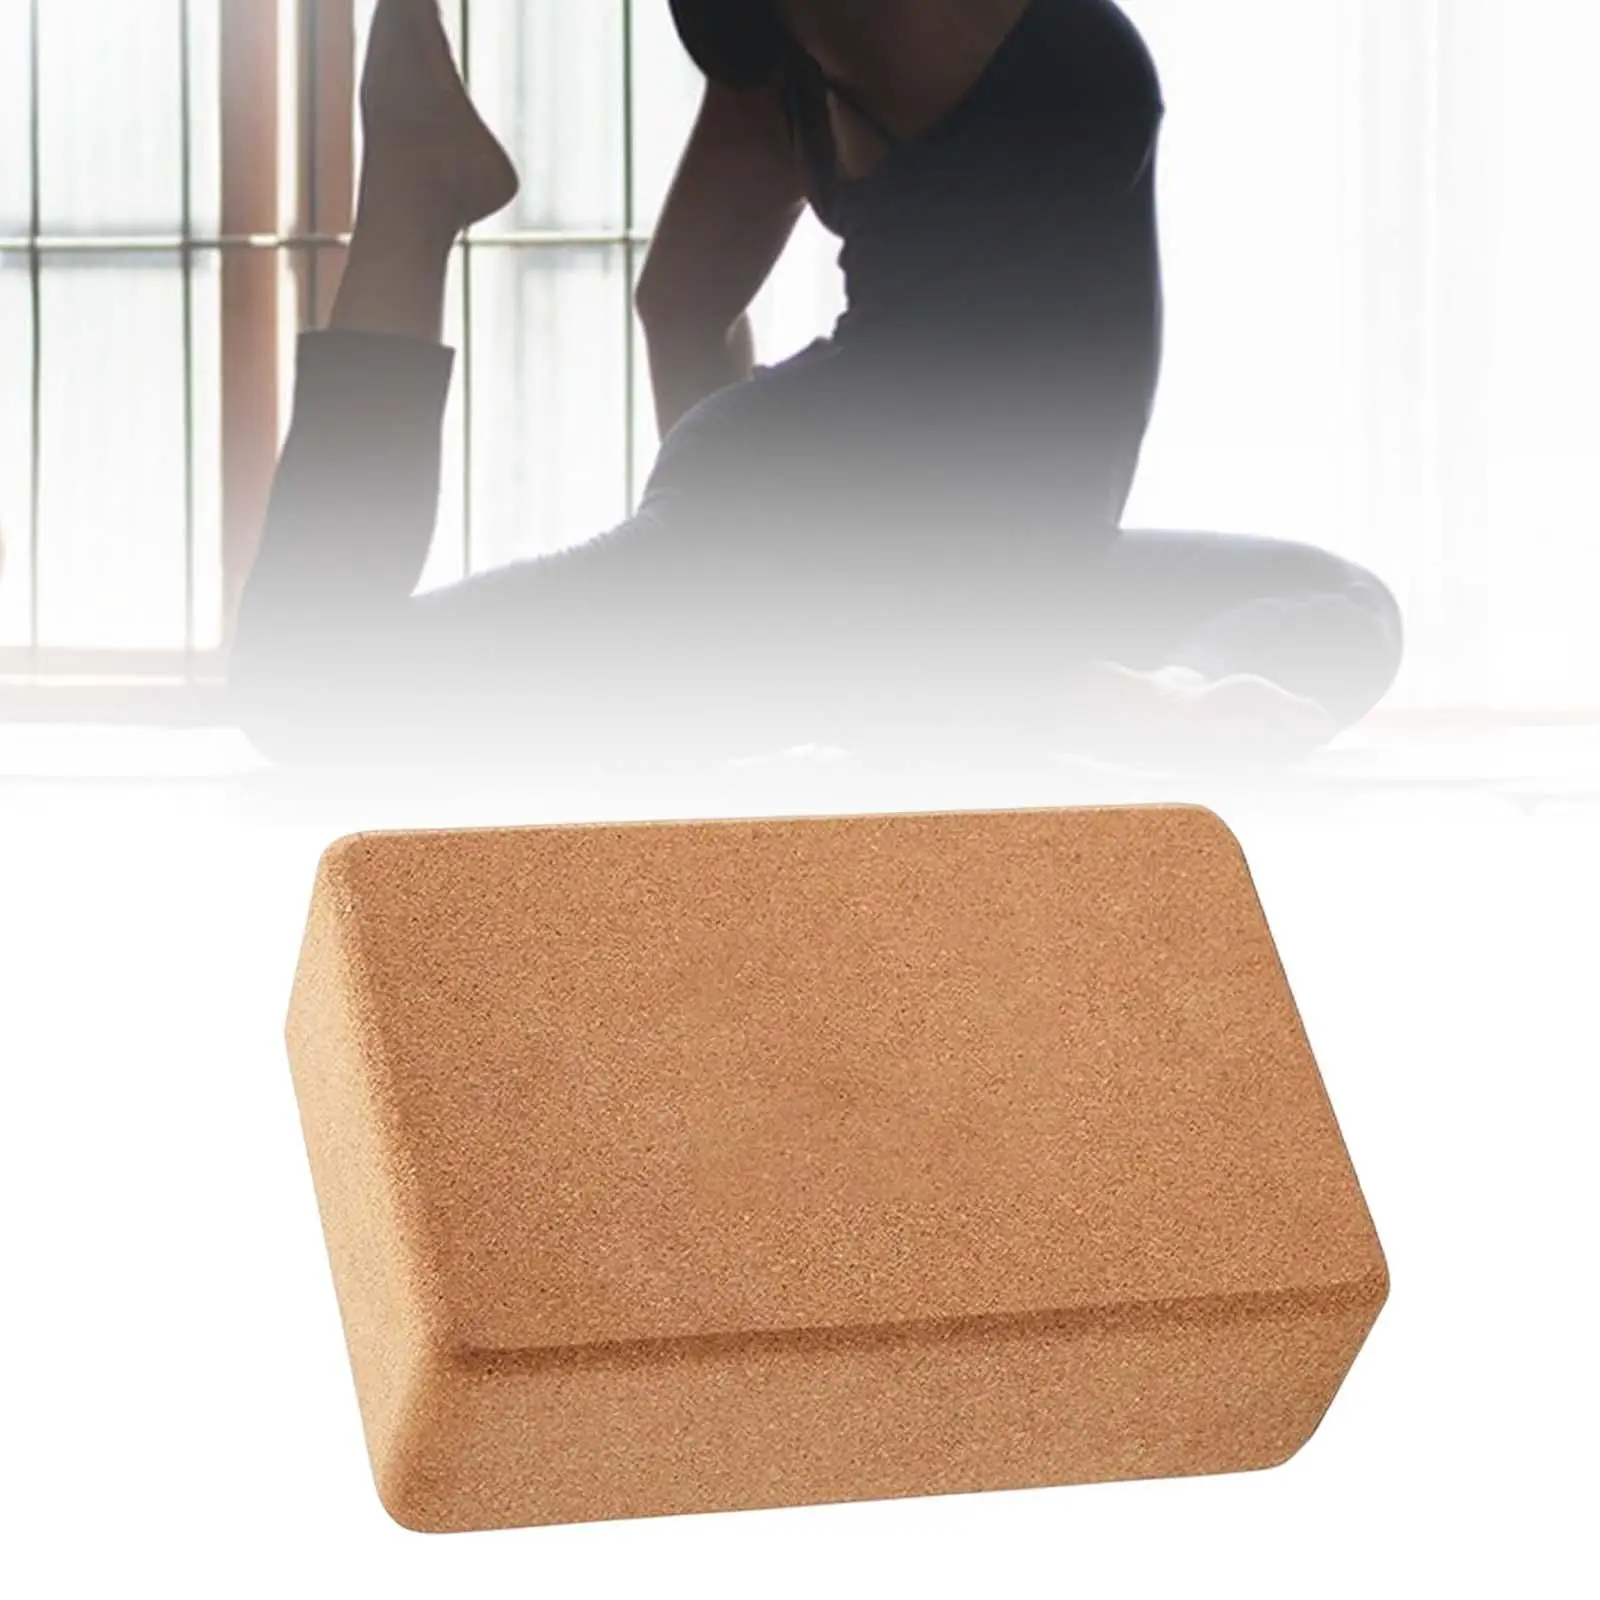 Yoga Brick Exercise Brick Meditation Soft for Stretching Indoor Sports